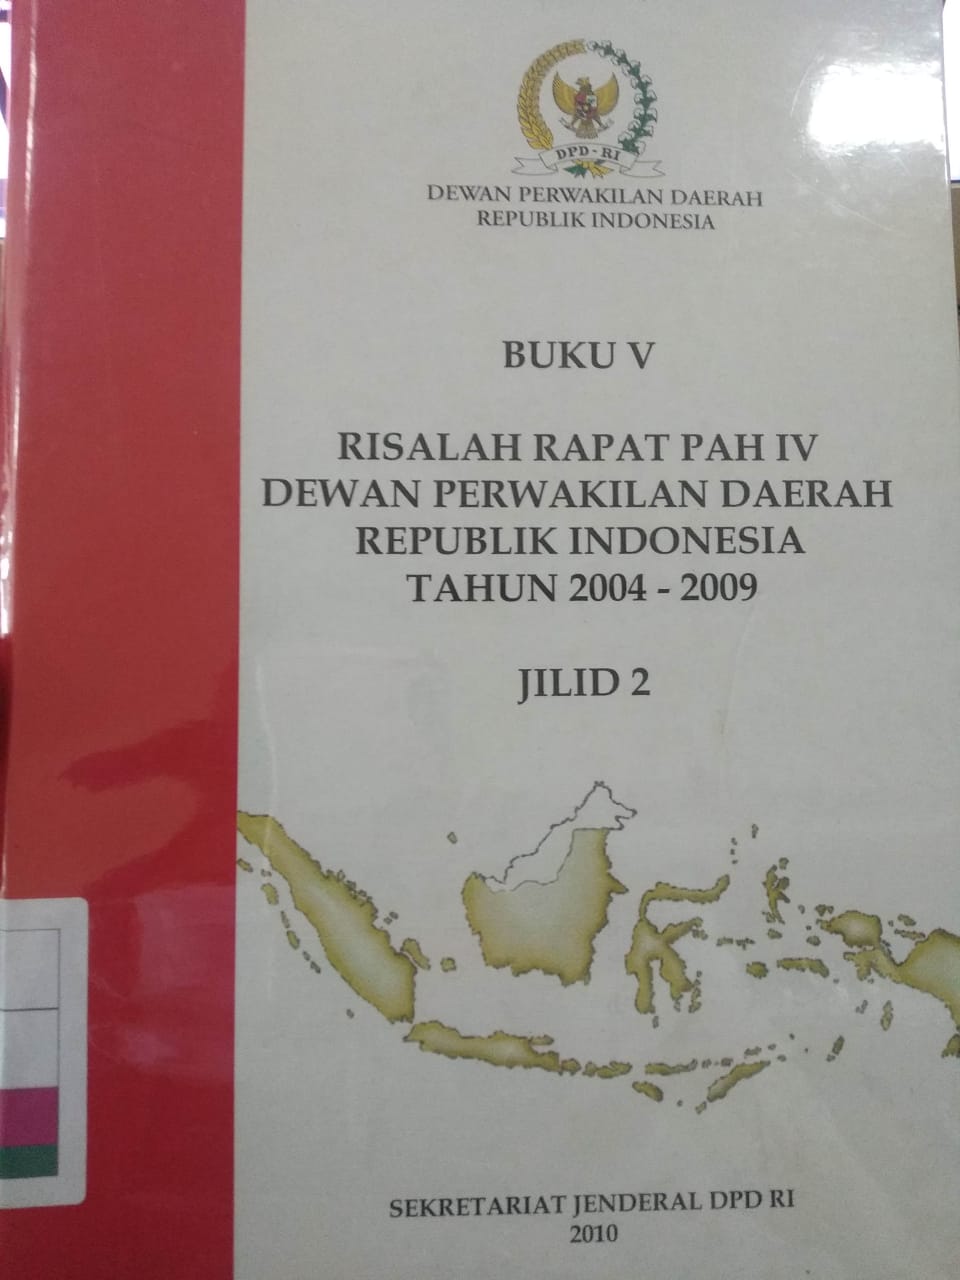 Buku V. Risalah Rapat PAH IV Dewan Perwakilan Daerah Republik Indonesia Tahun 2004 - 2009 Jilid 2